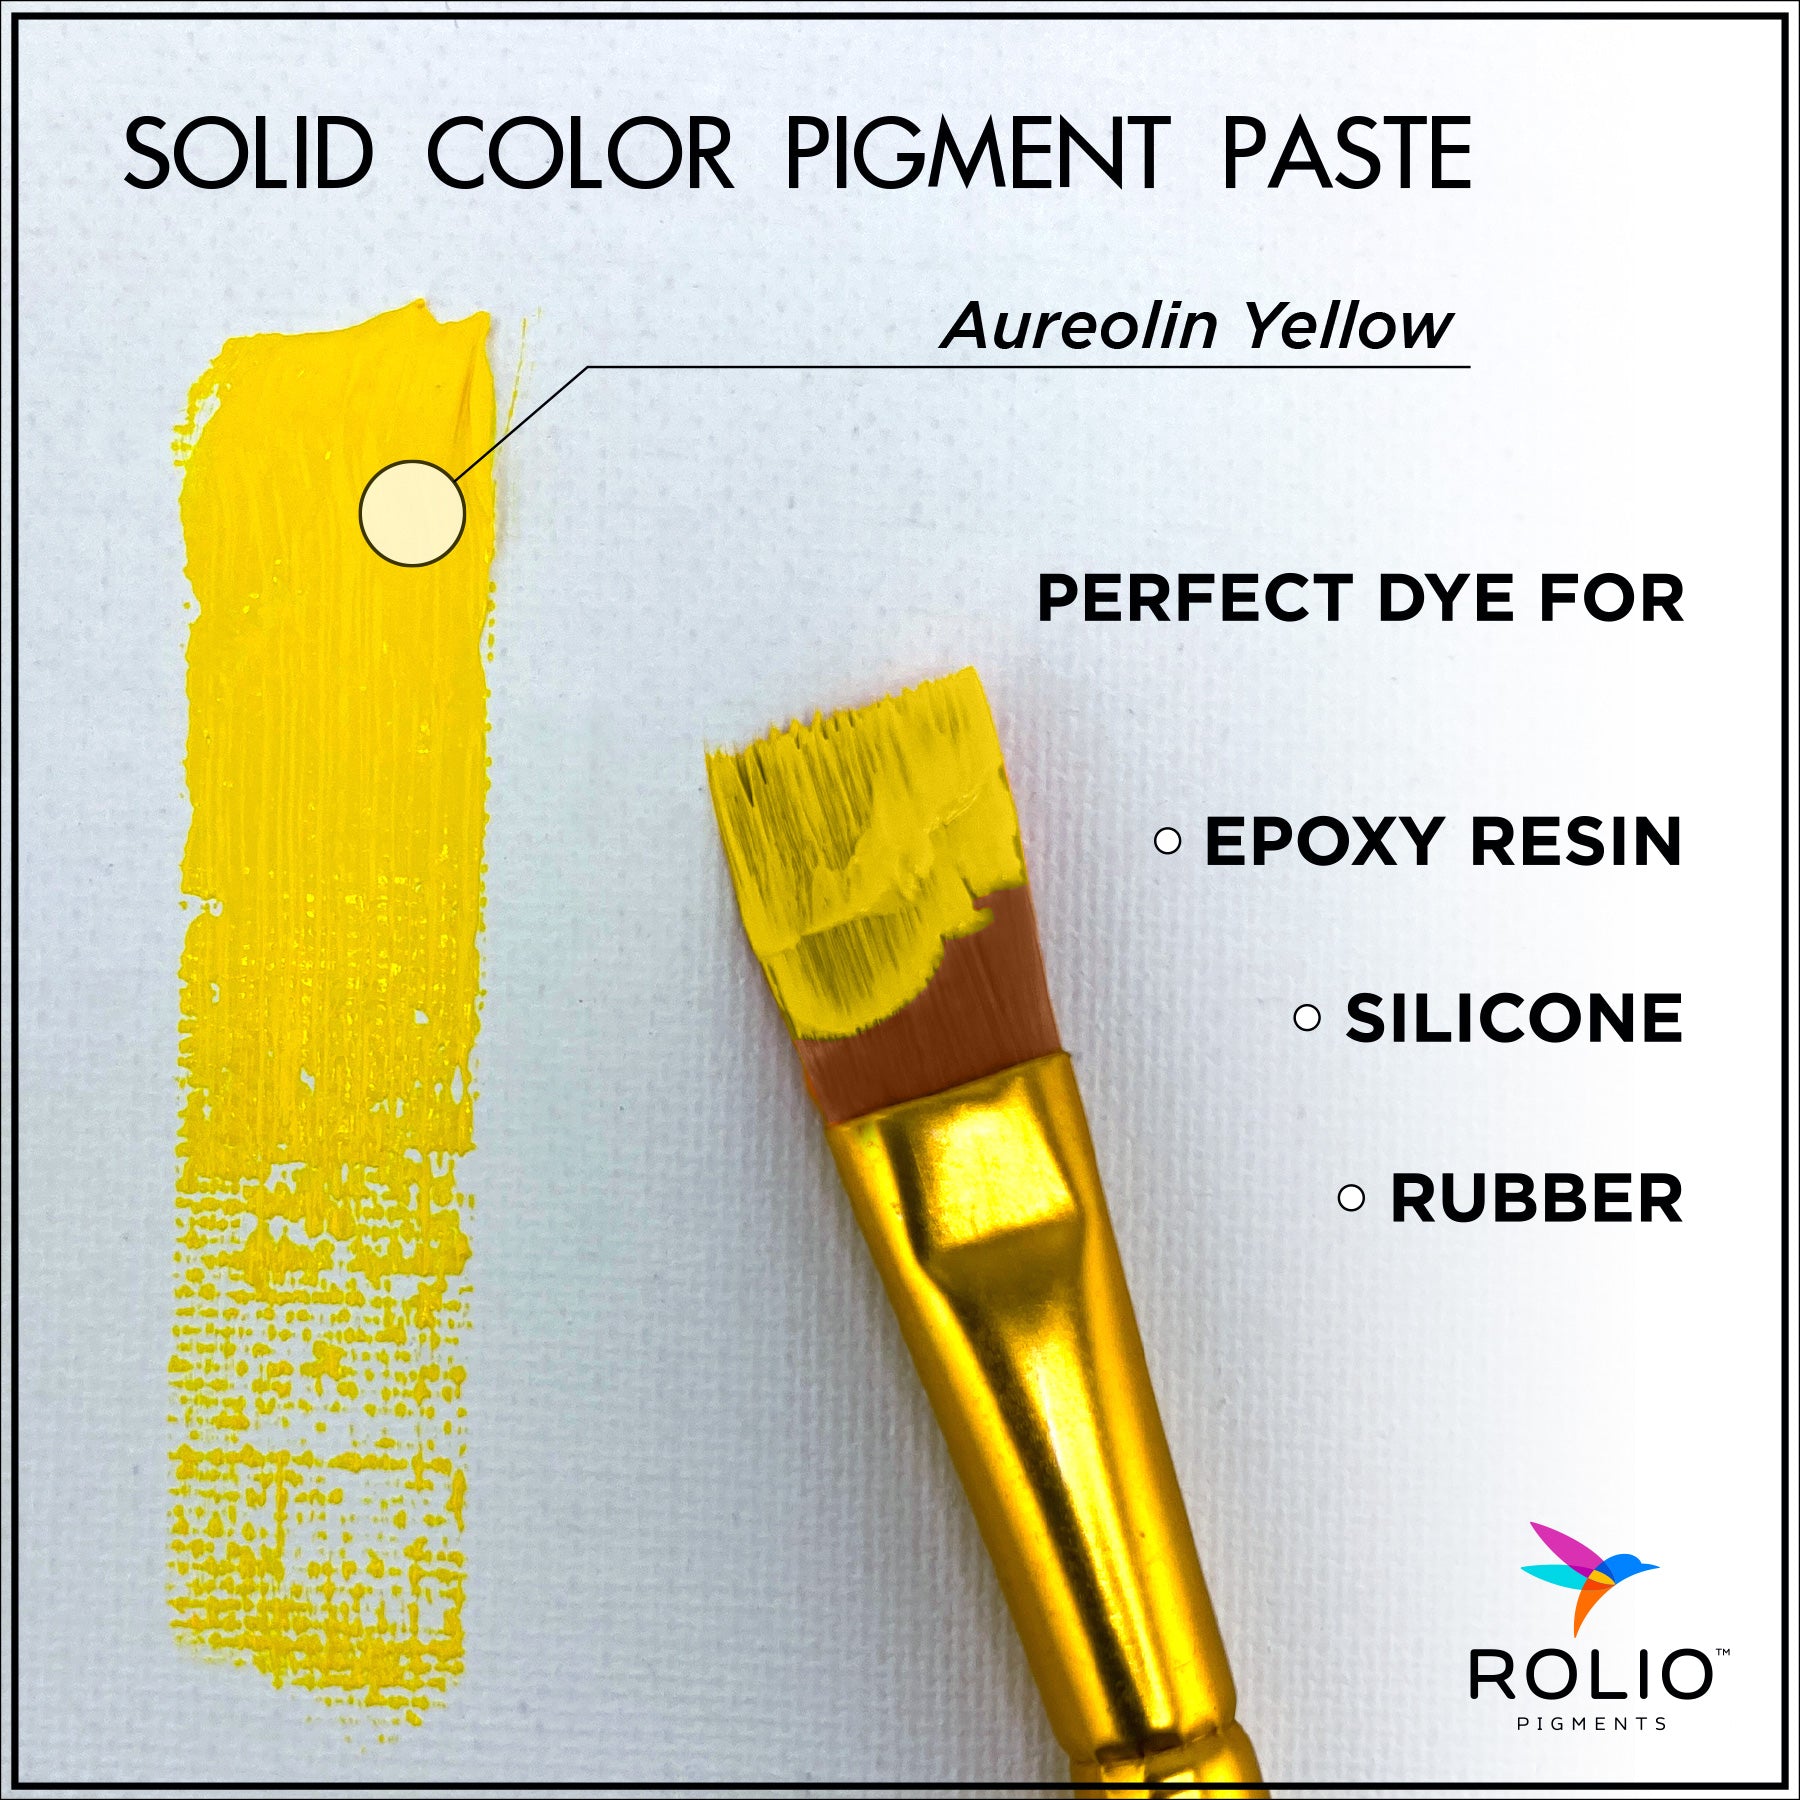 03-Rolio-Aureolin-Yellow-Pigment-Paste-Description.jpg